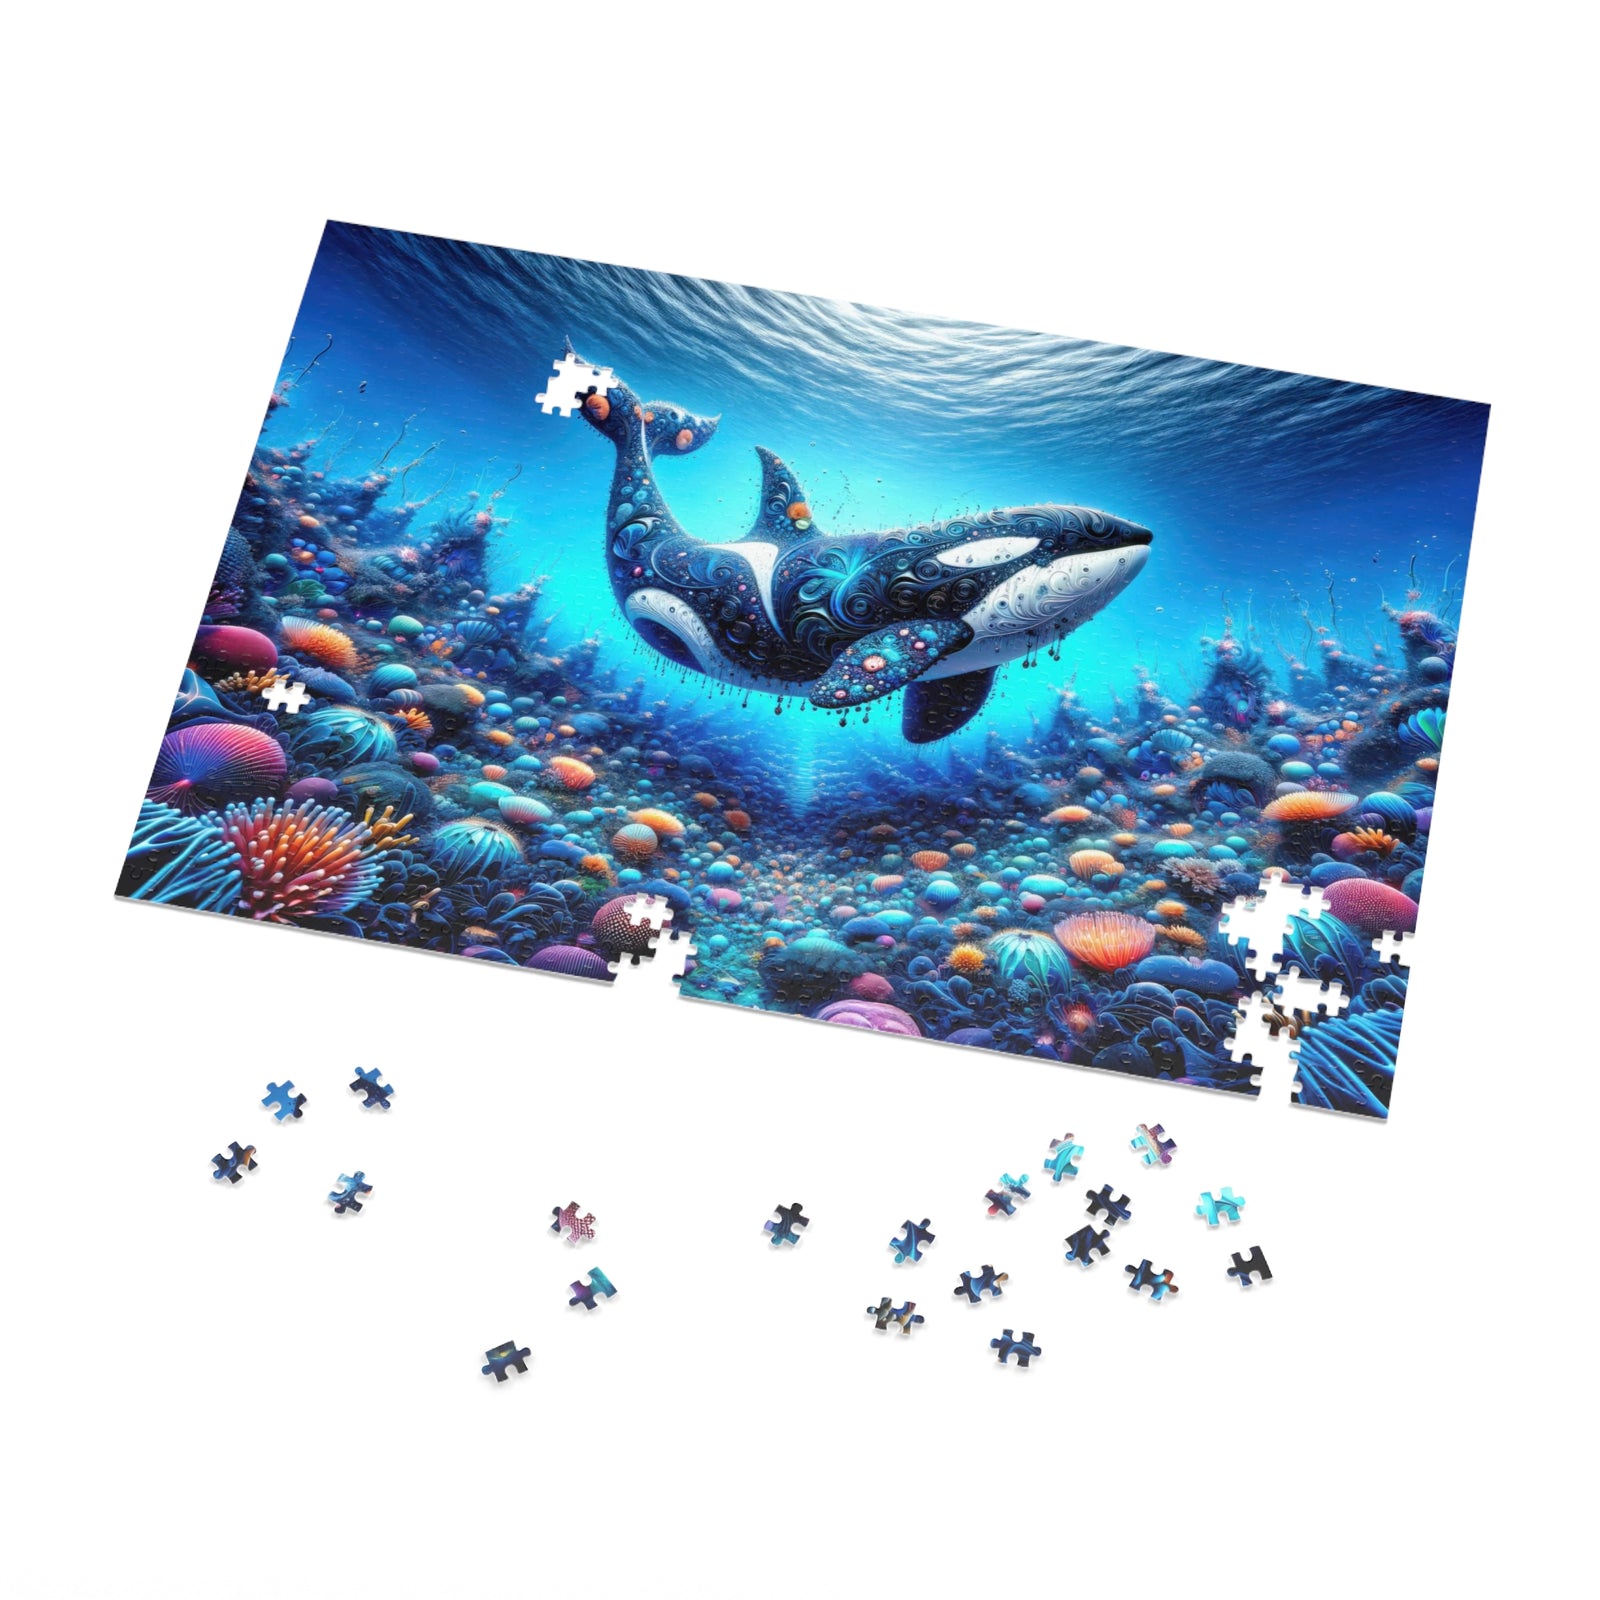 Elysium’s Leviathan Jigsaw Puzzle